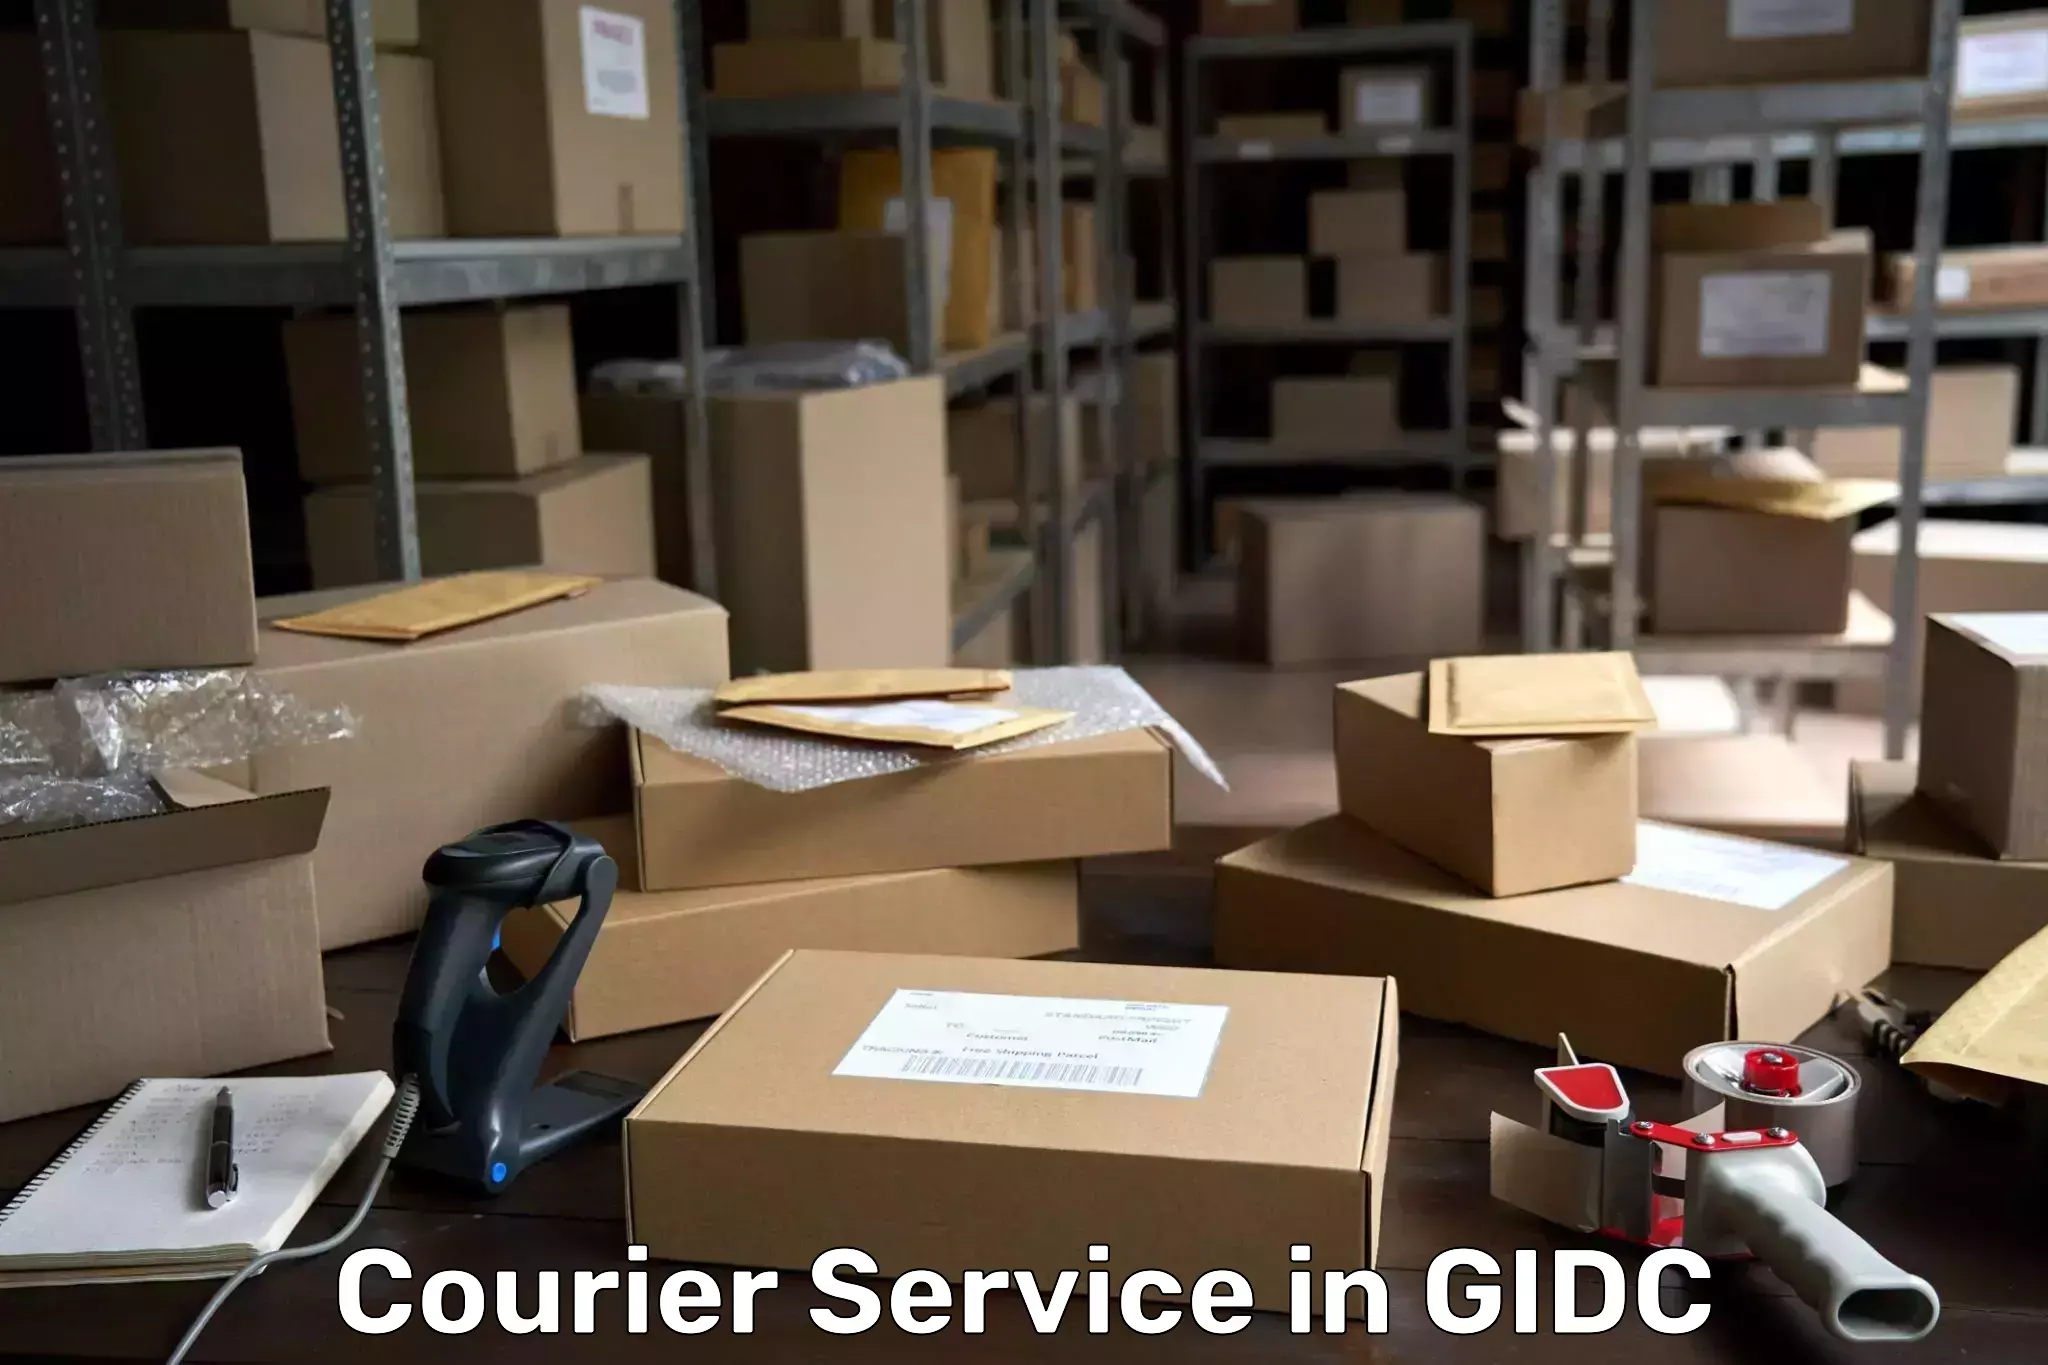 Doorstep delivery service in GIDC